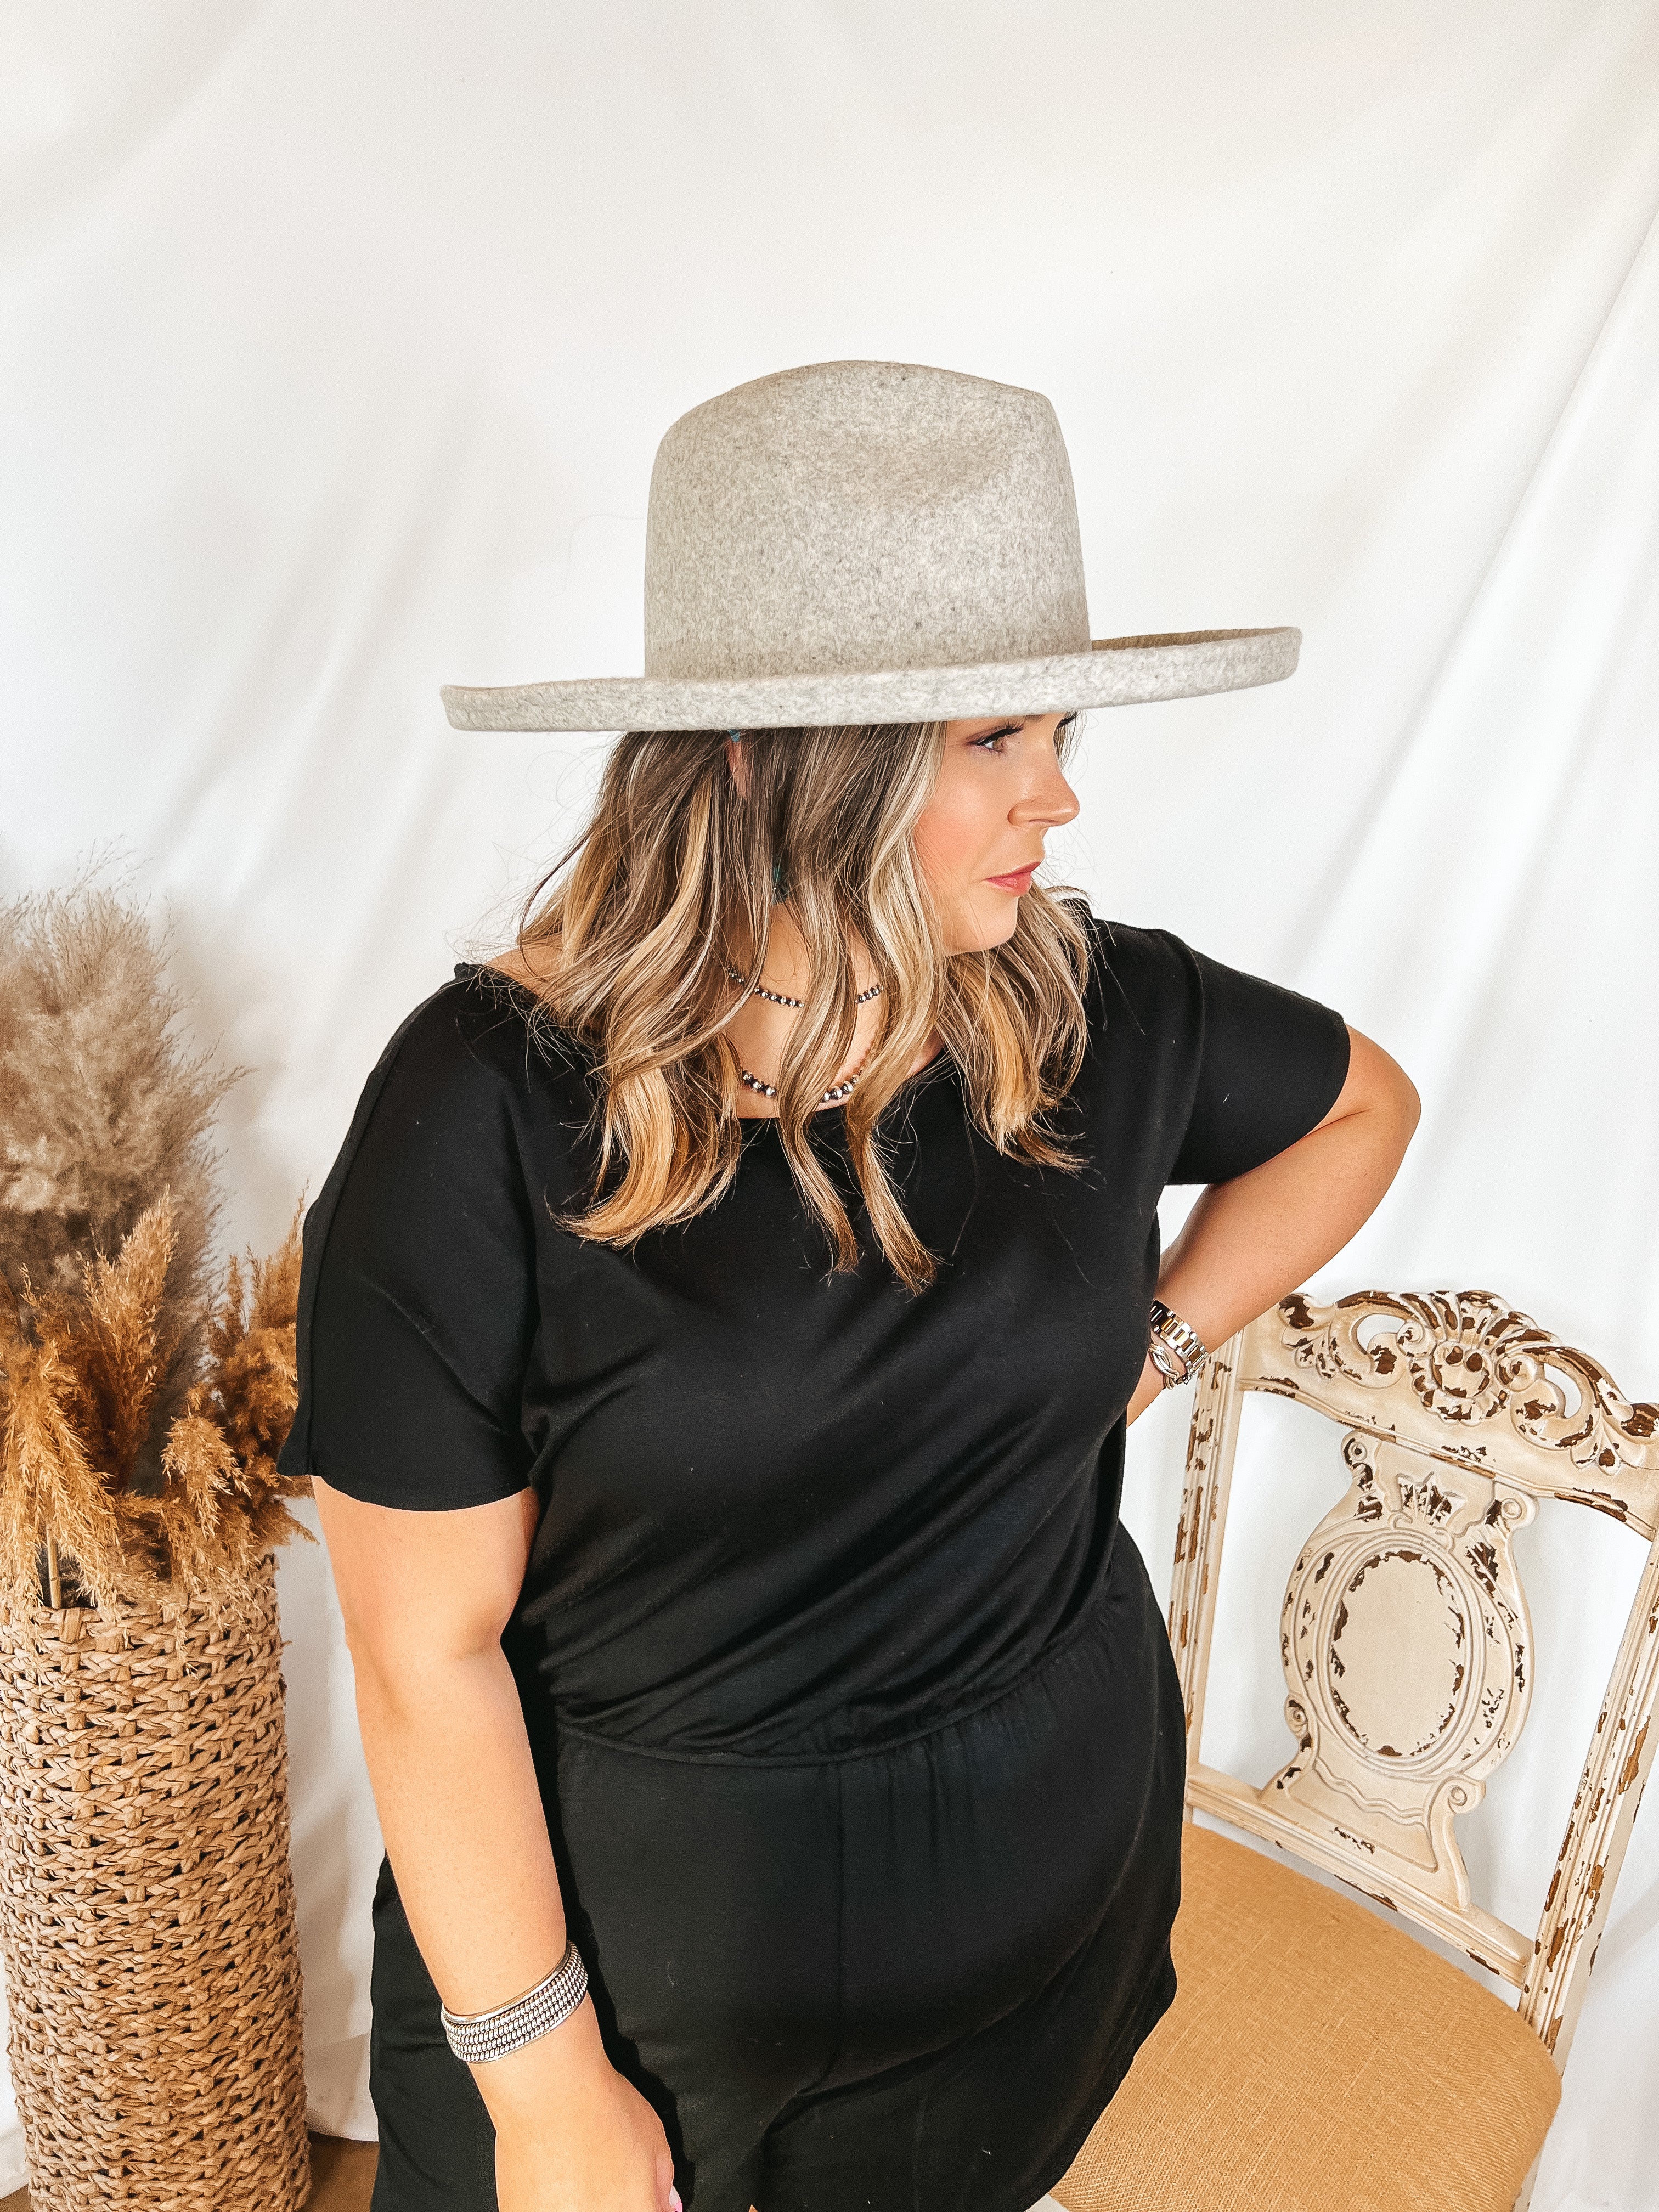 GiGi Pip | Cara Loren Pencil Brim Wool Felt Hat in Heather Grey - Giddy Up Glamour Boutique